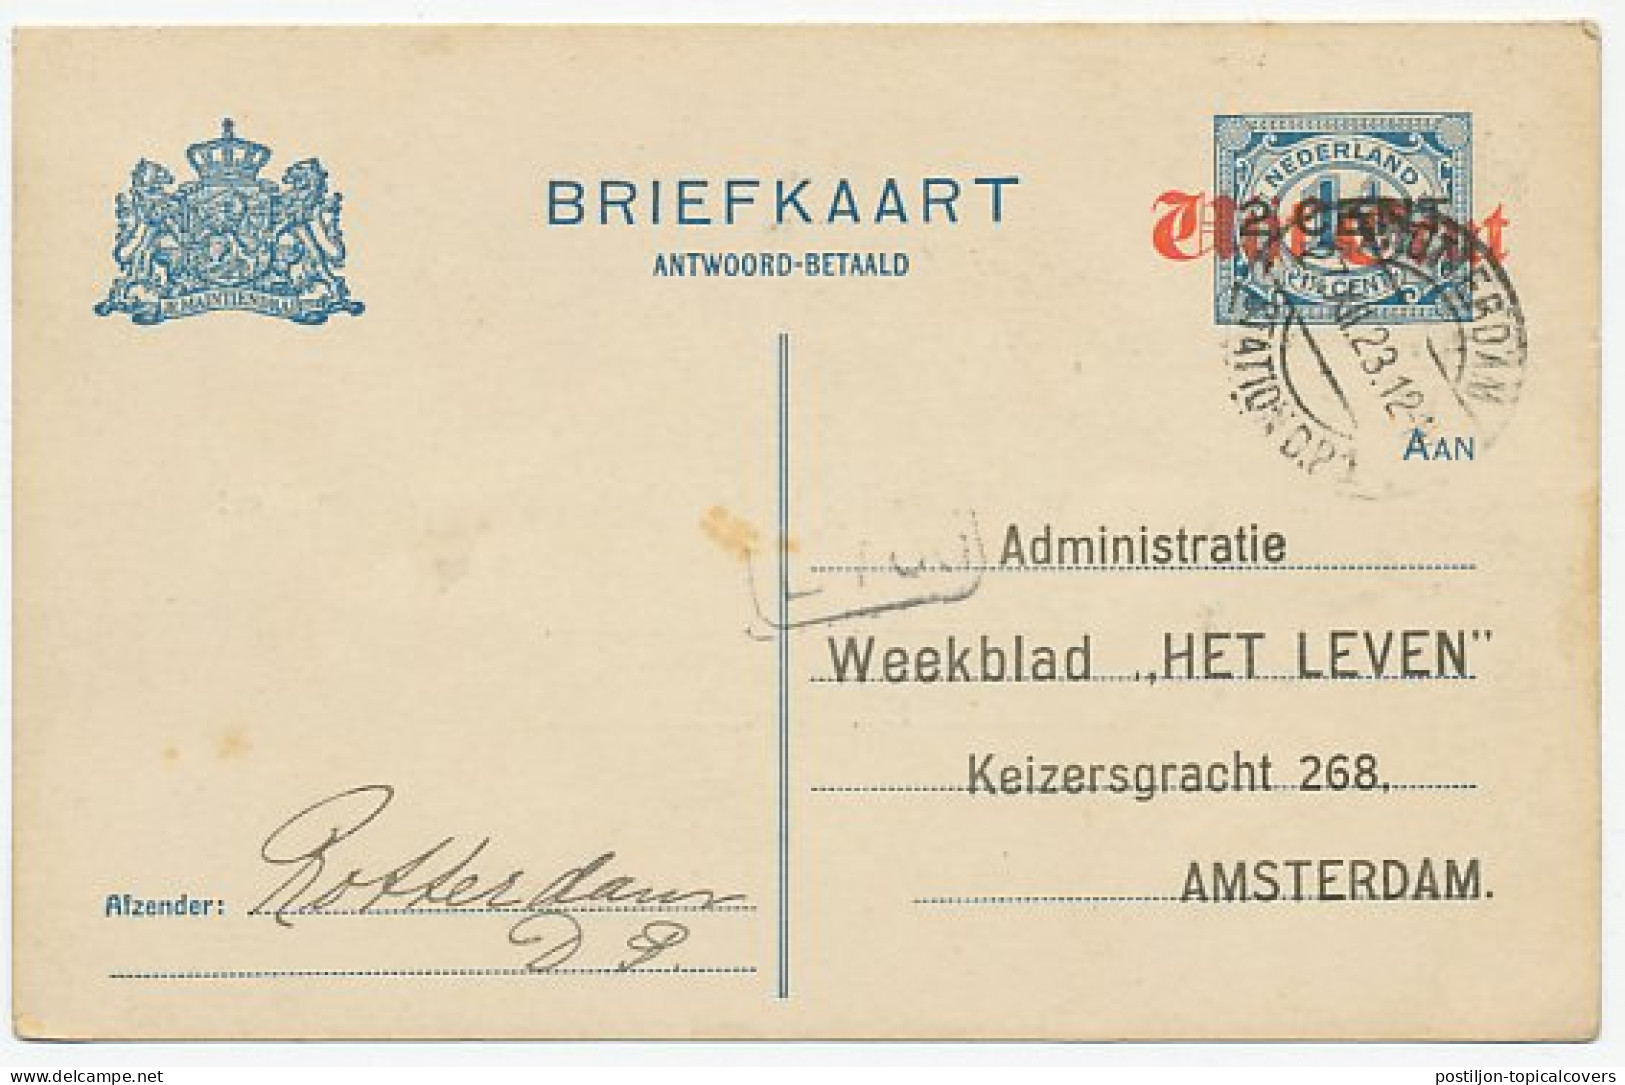 Briefkaart G. 118 Particulier Bedrukt Rotterdam 1923 - Entiers Postaux